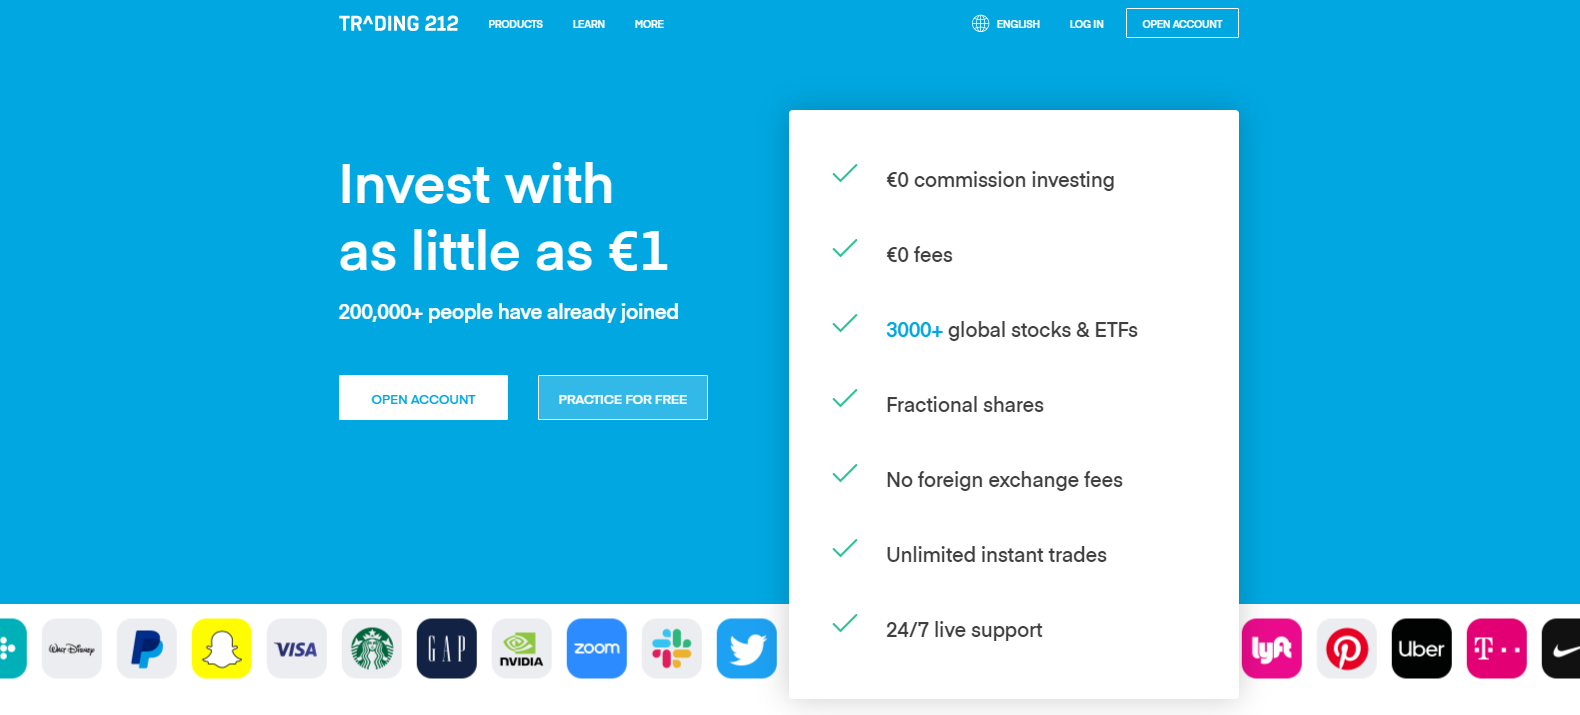 Trading 212 Homepage